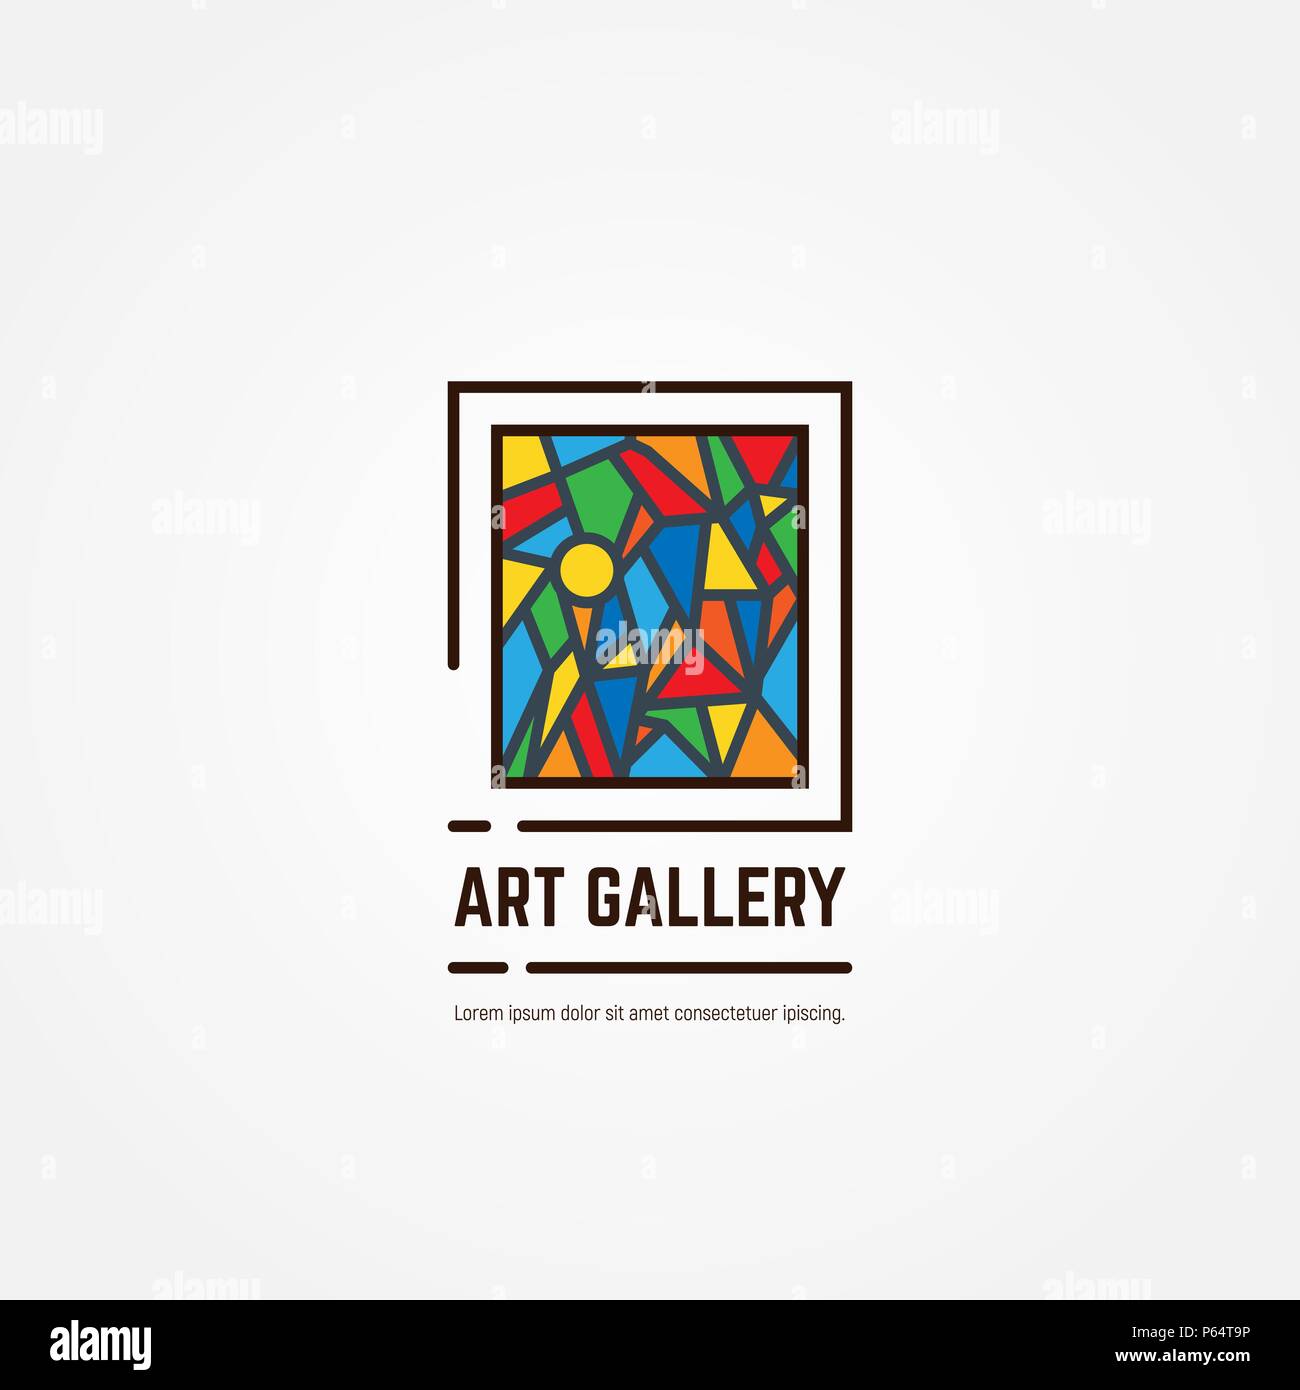 Art gallery emblem Stock Vector